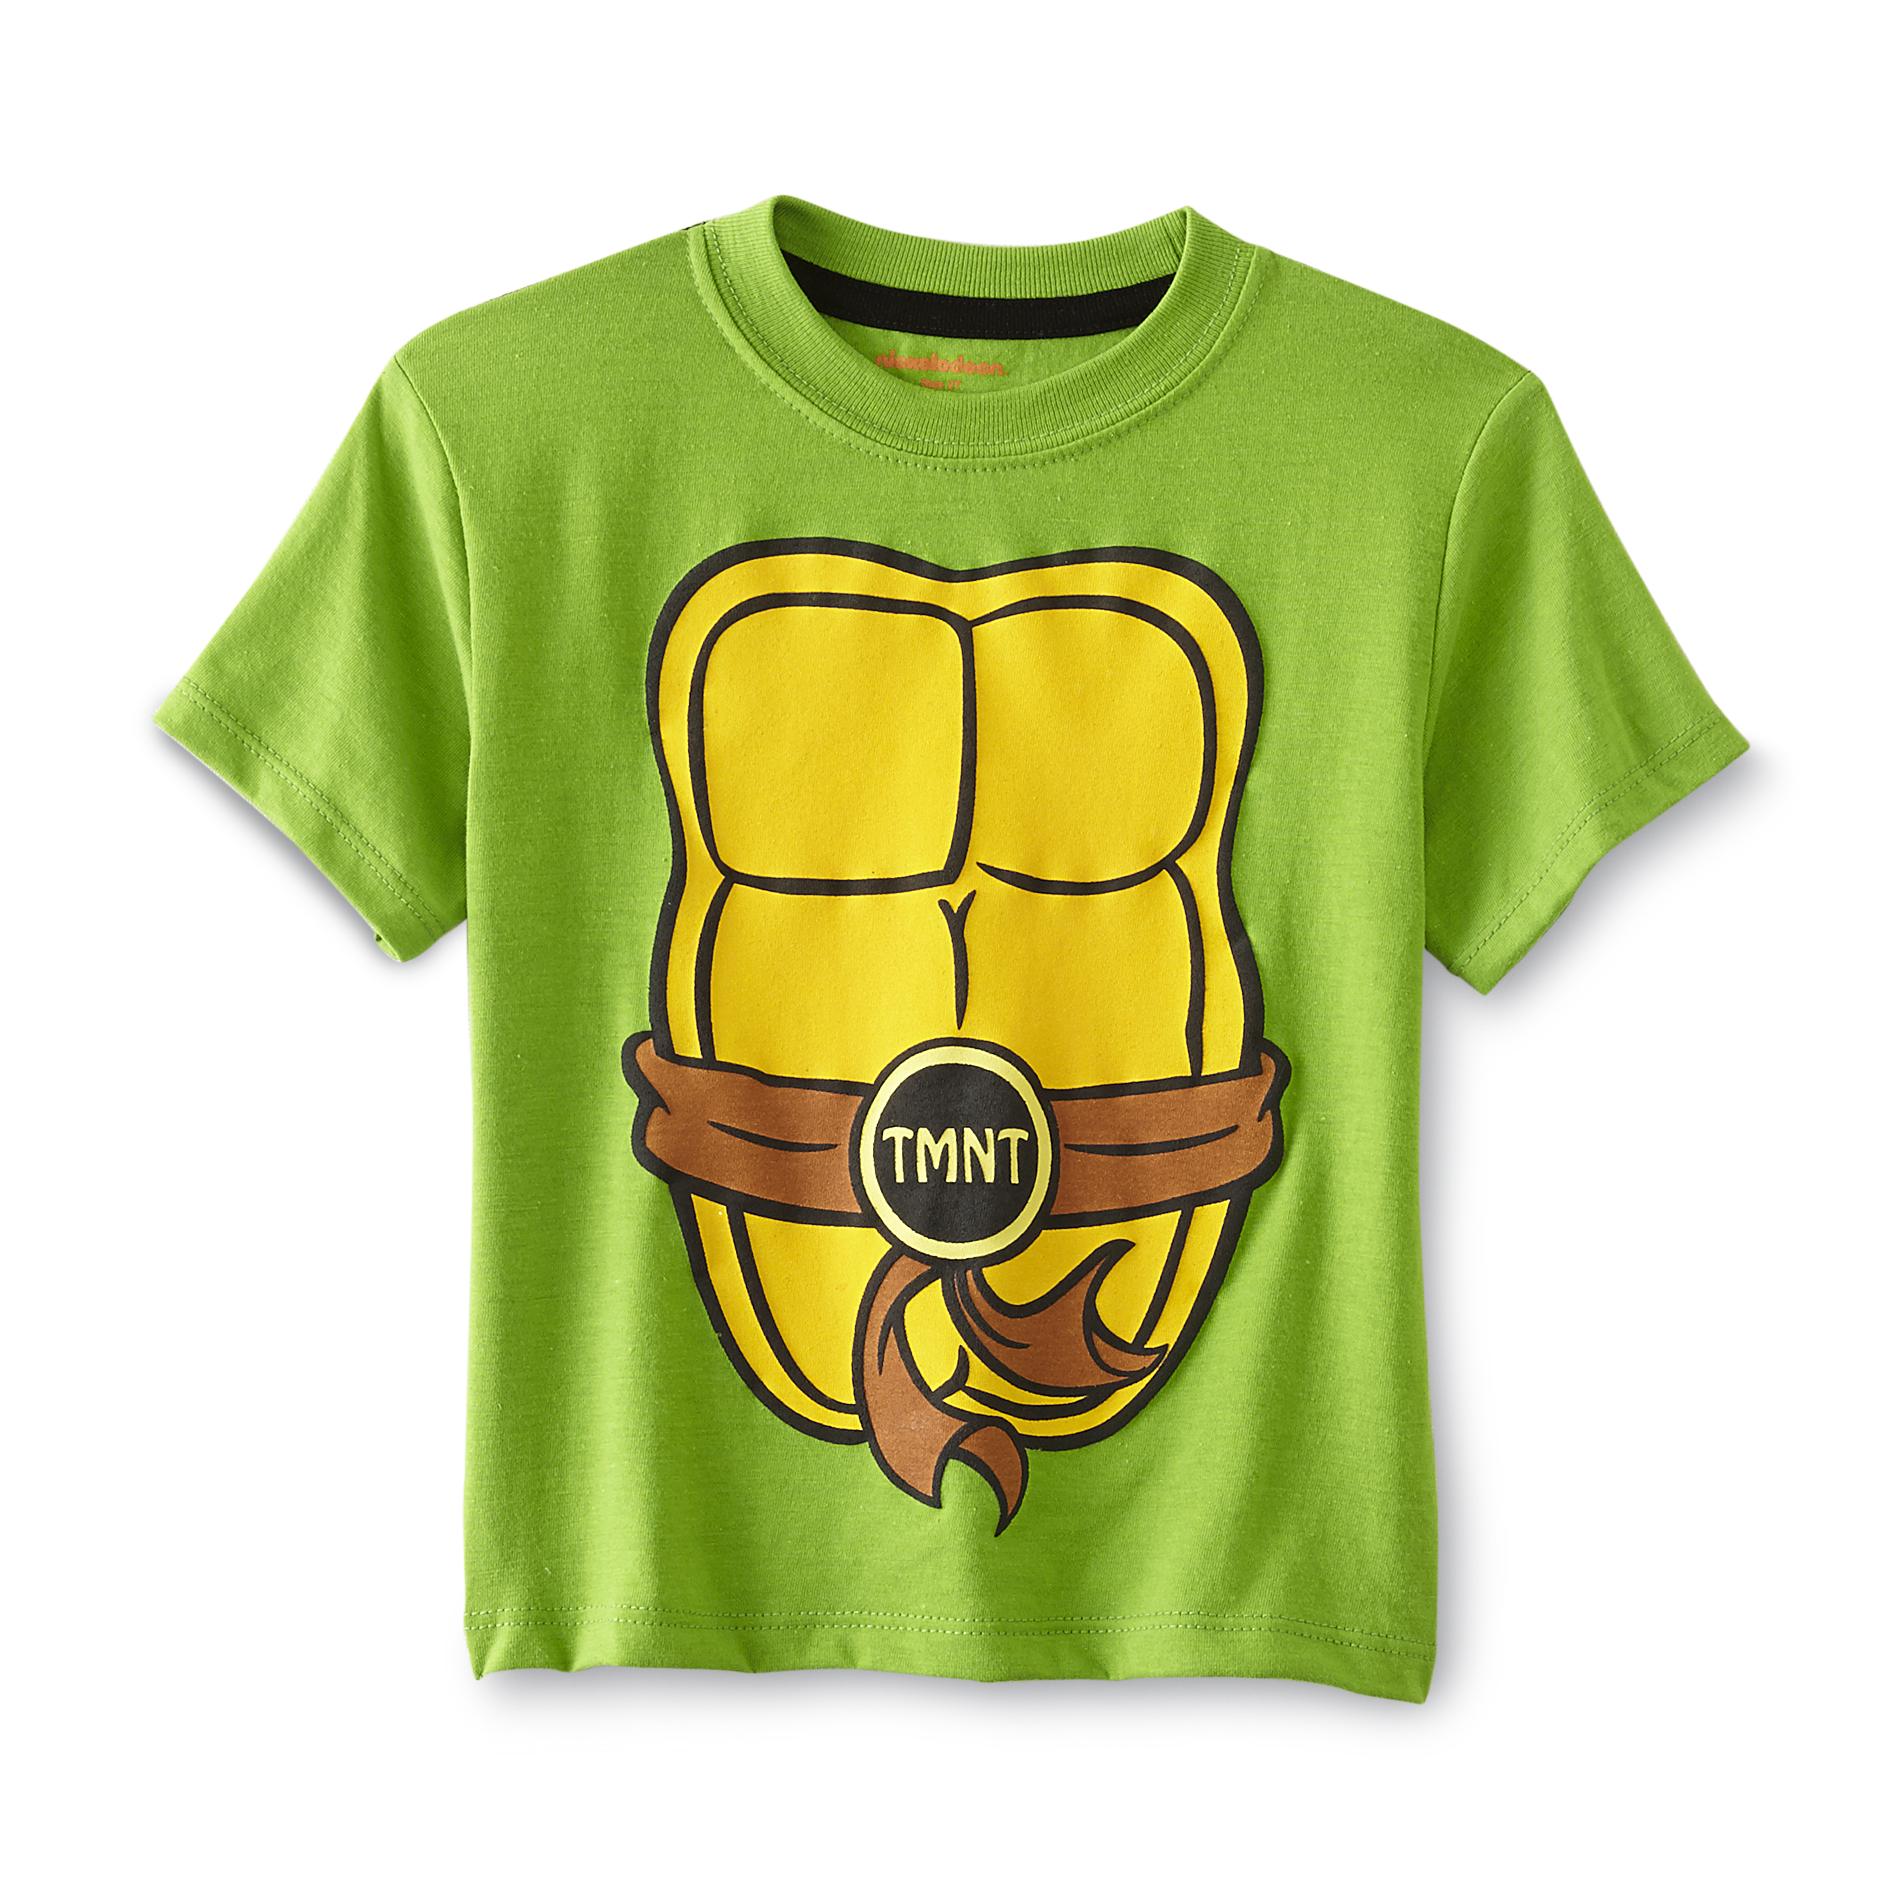 Nickelodeon Teenage Mutant Ninja Turtles Toddler Boy's Graphic T-Shirt